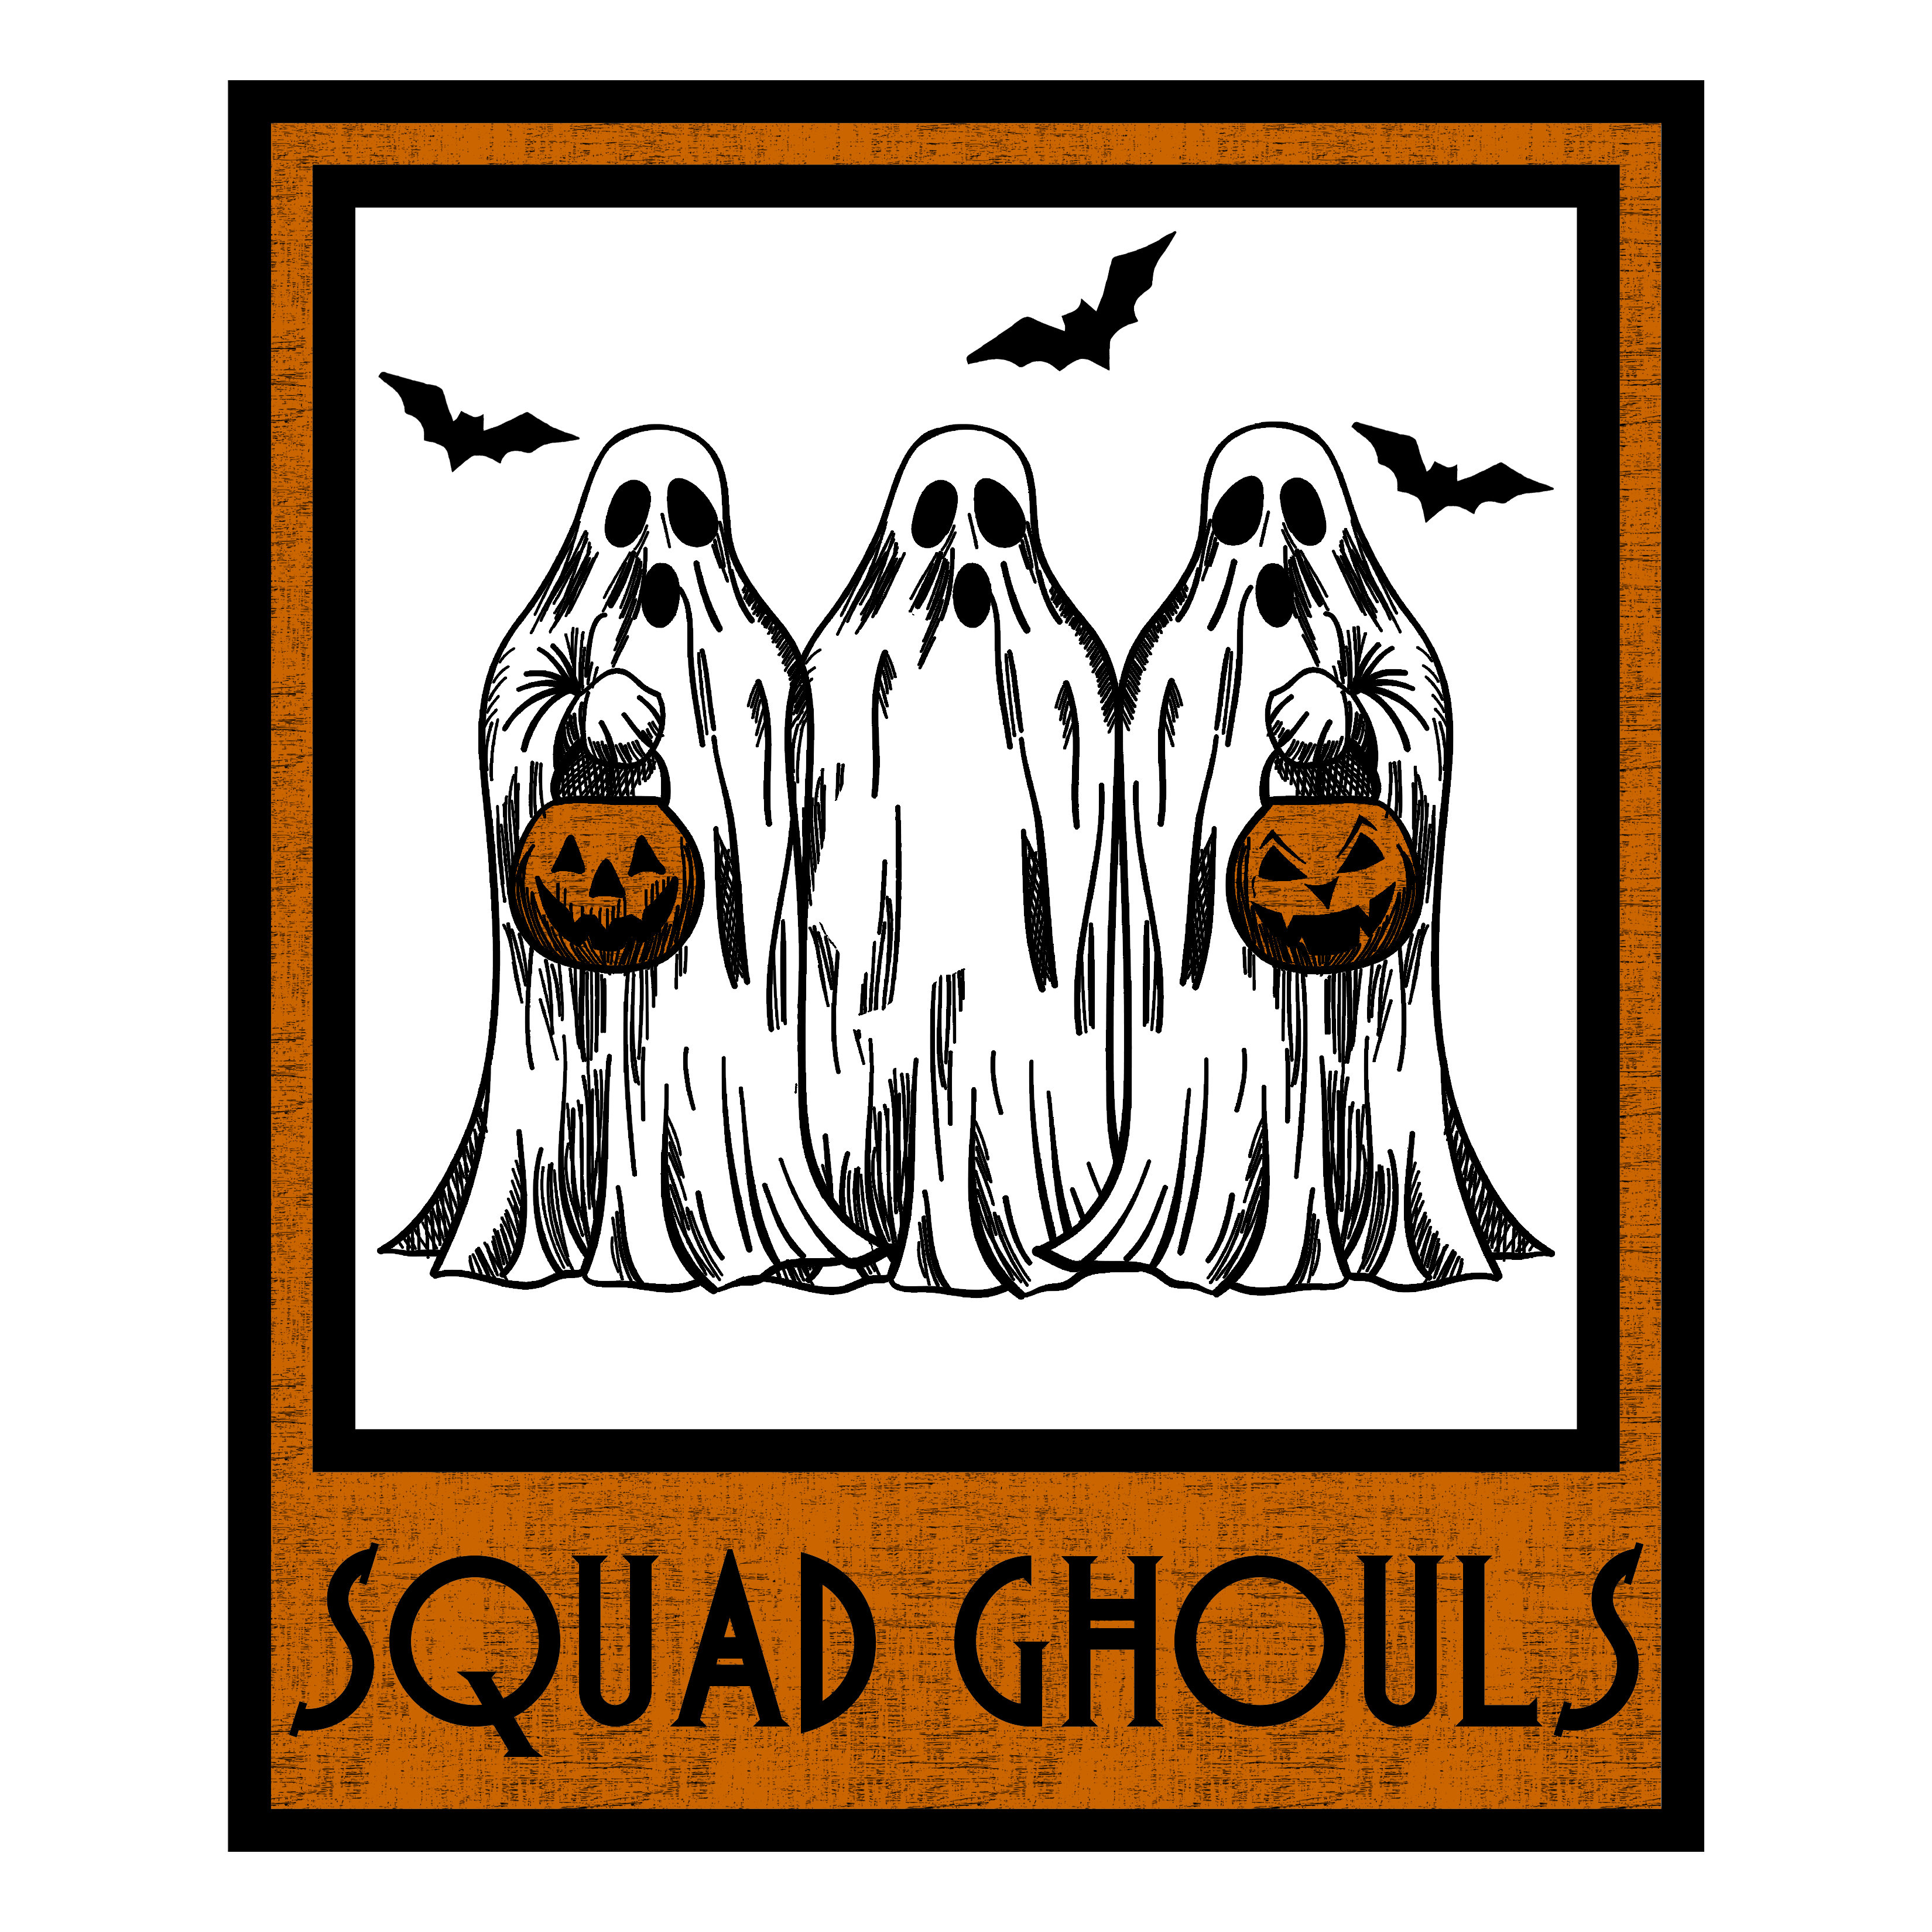 Sublimation Prints - Squad Ghouls - The Vinyl Haus